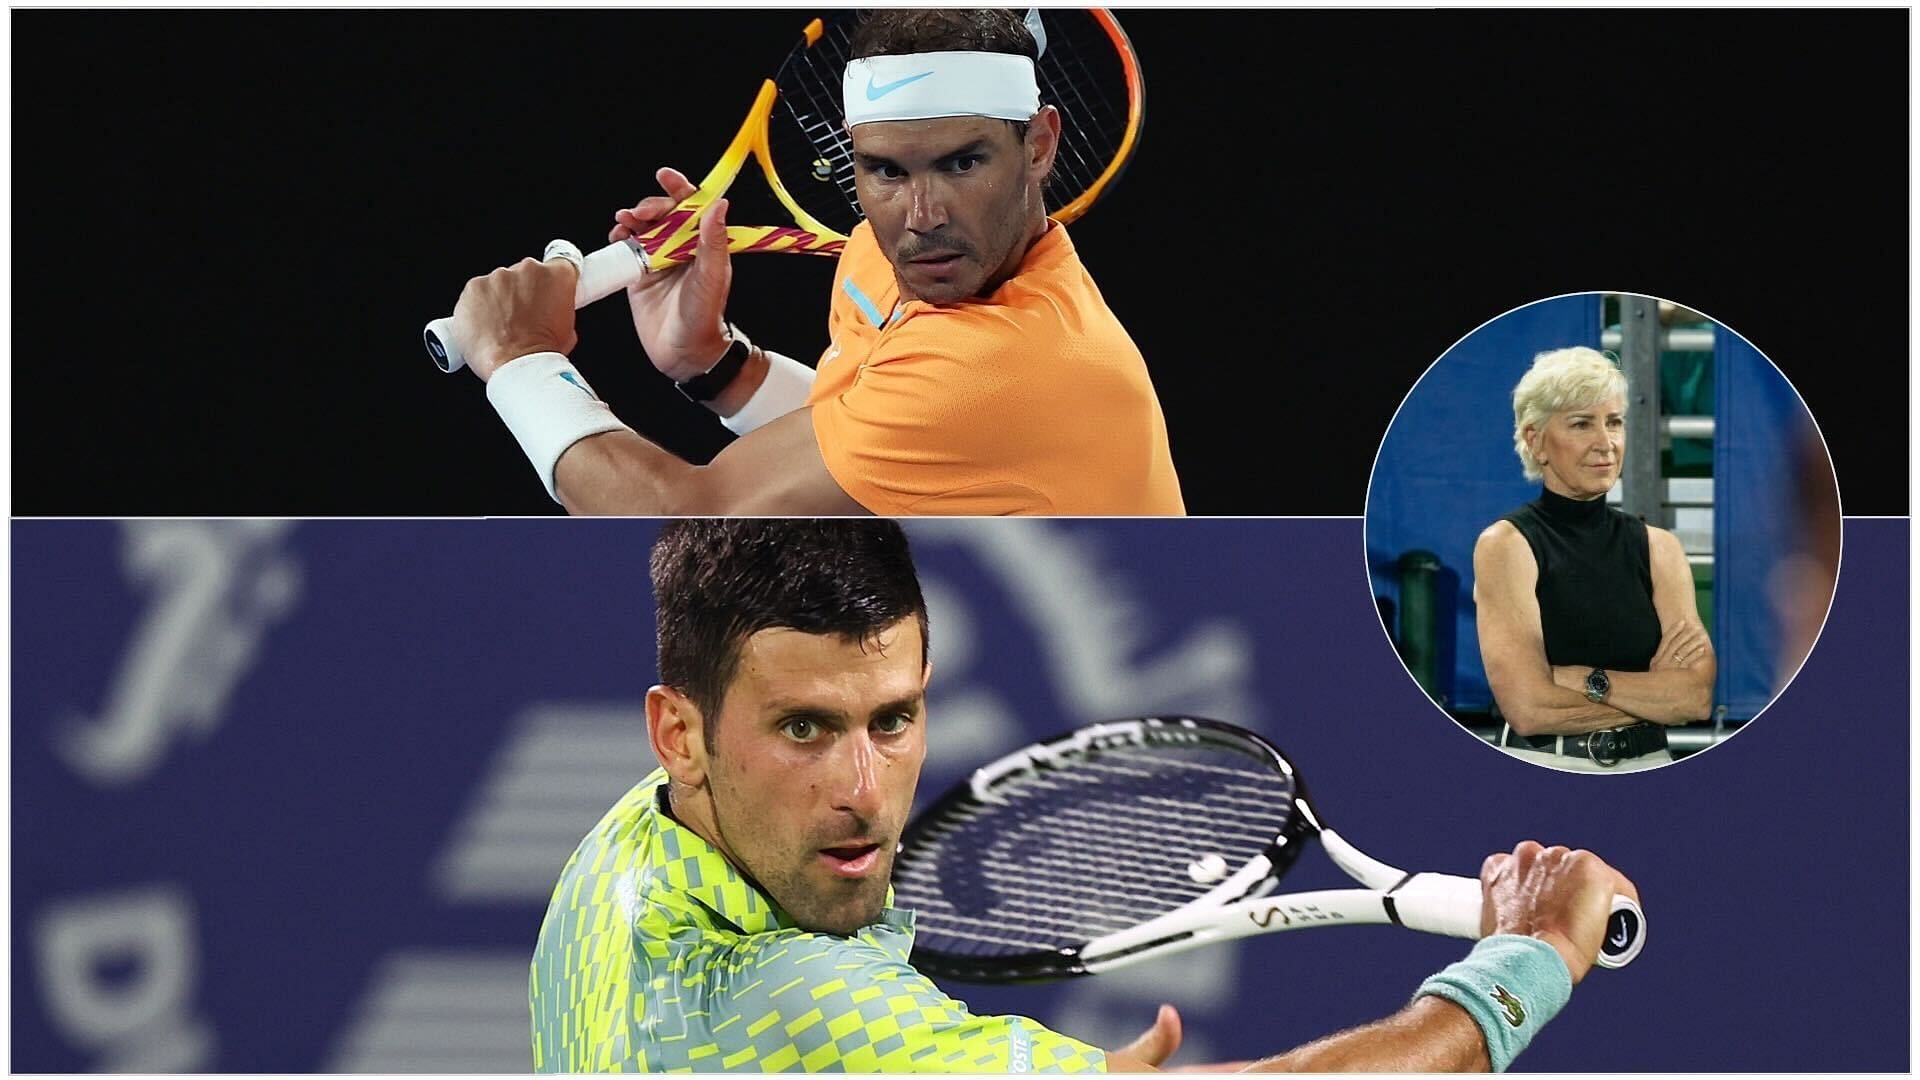 Chris Evert expresses uncertainty over Rafael Nadal and Novak Djokovic